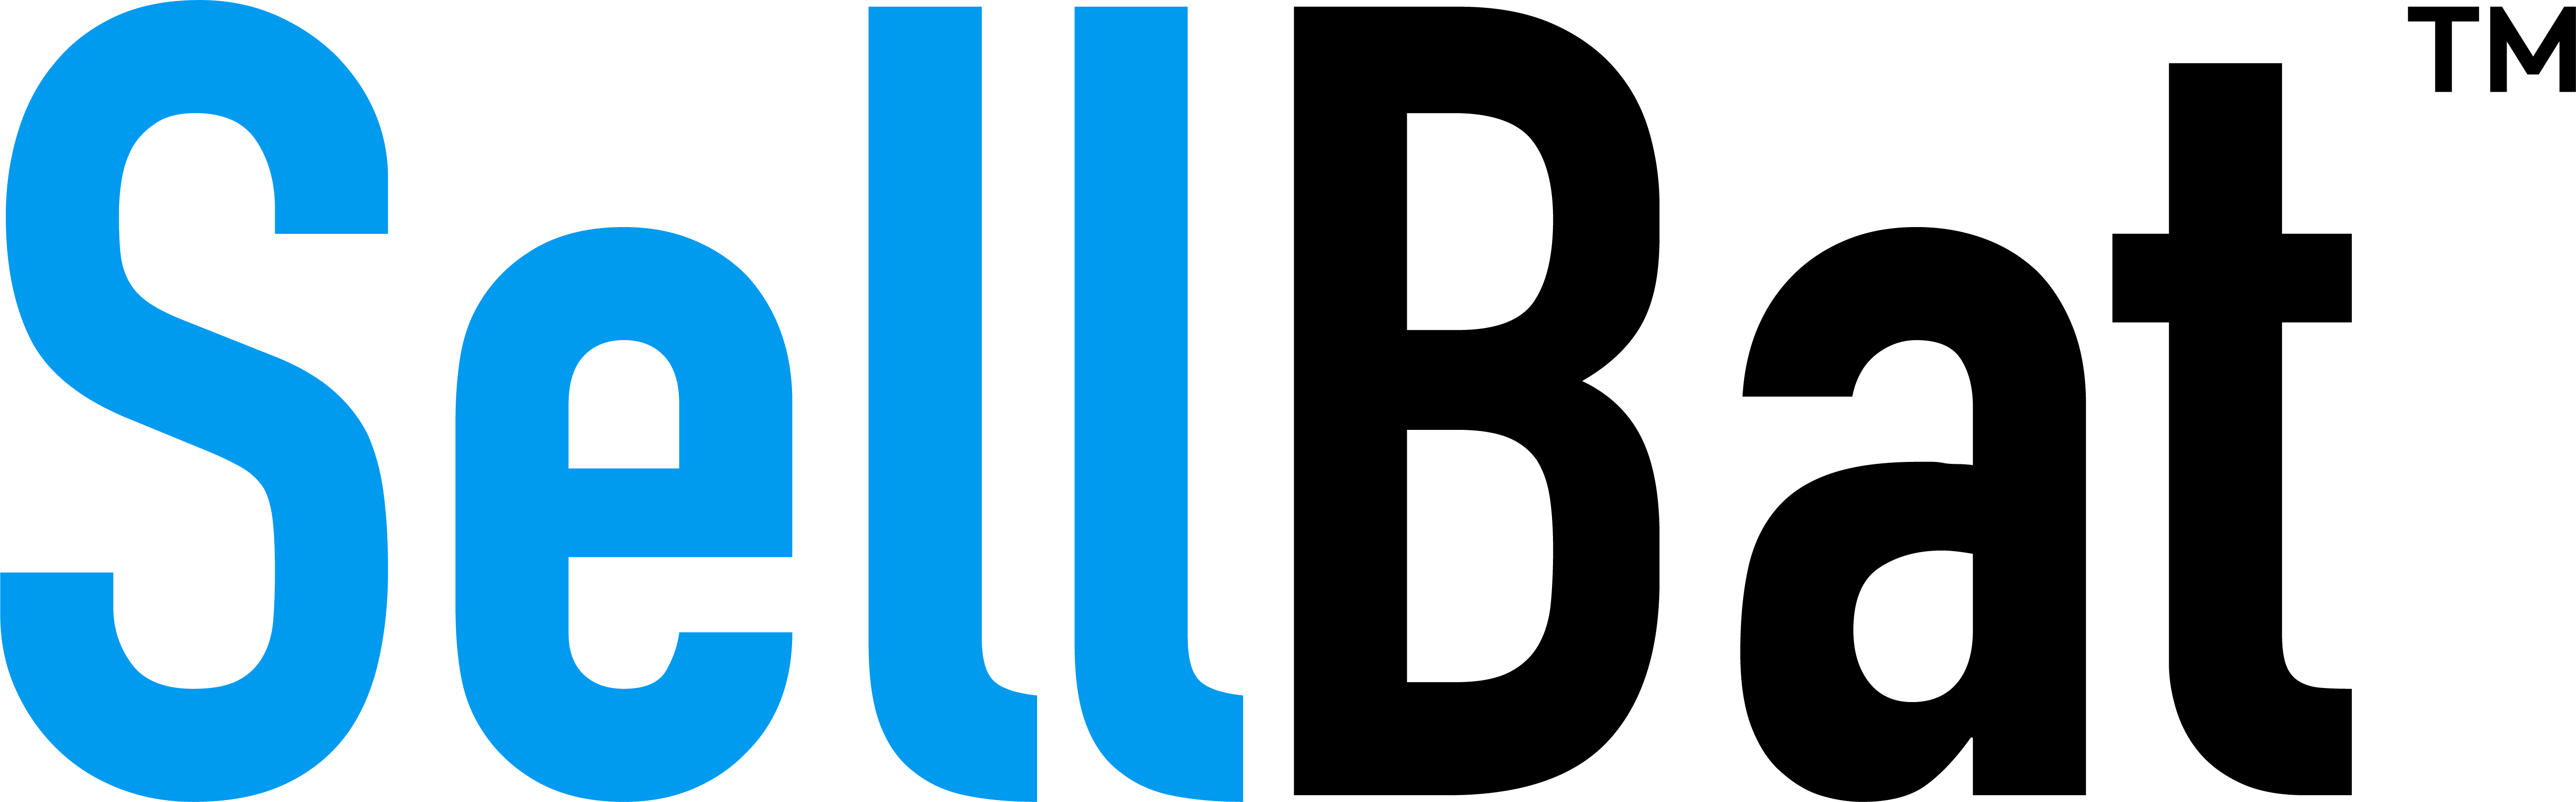 scale bat logo